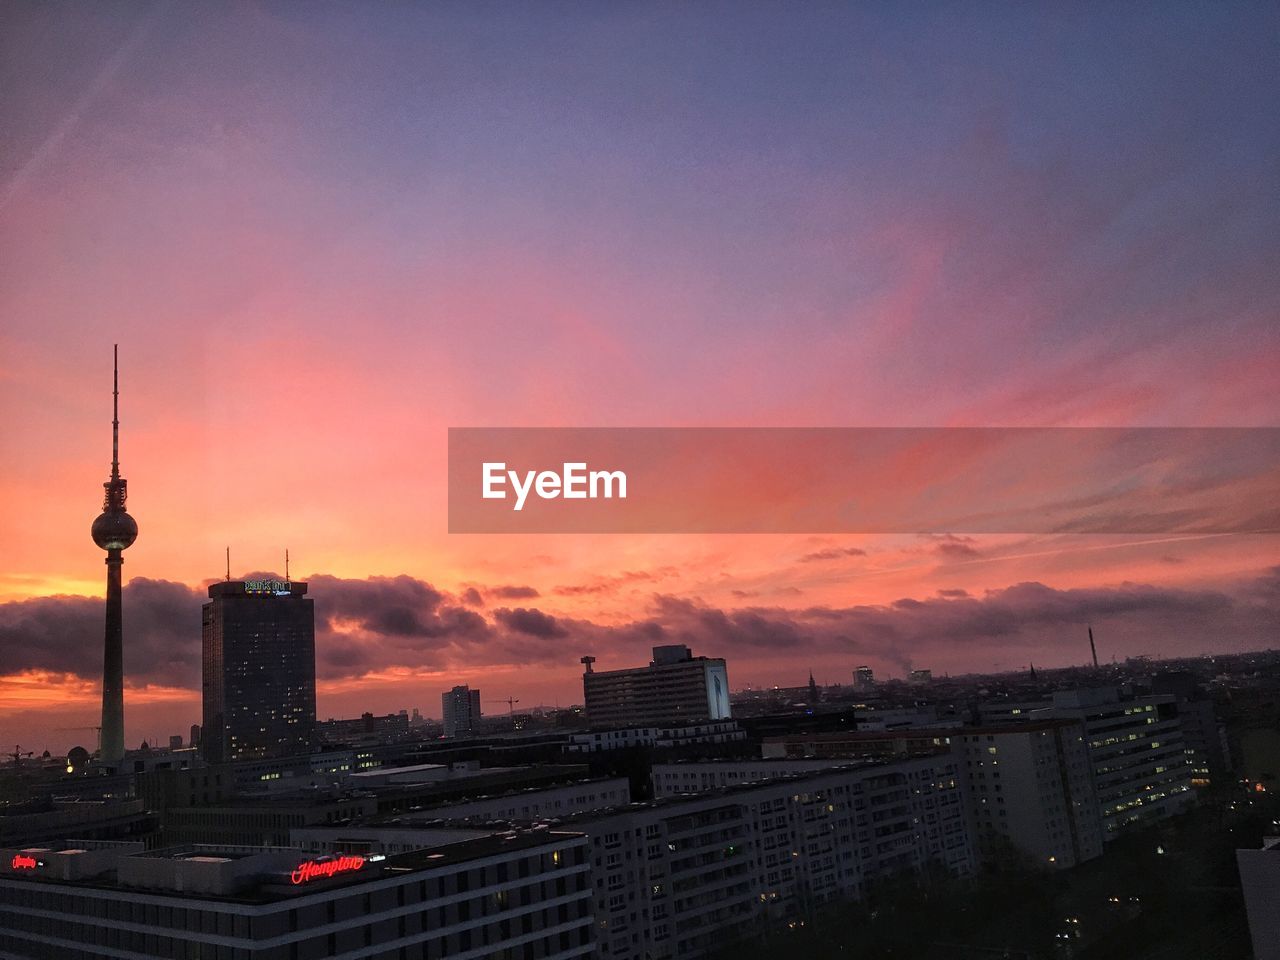 Silhouette fernsehturm against sky during sunset